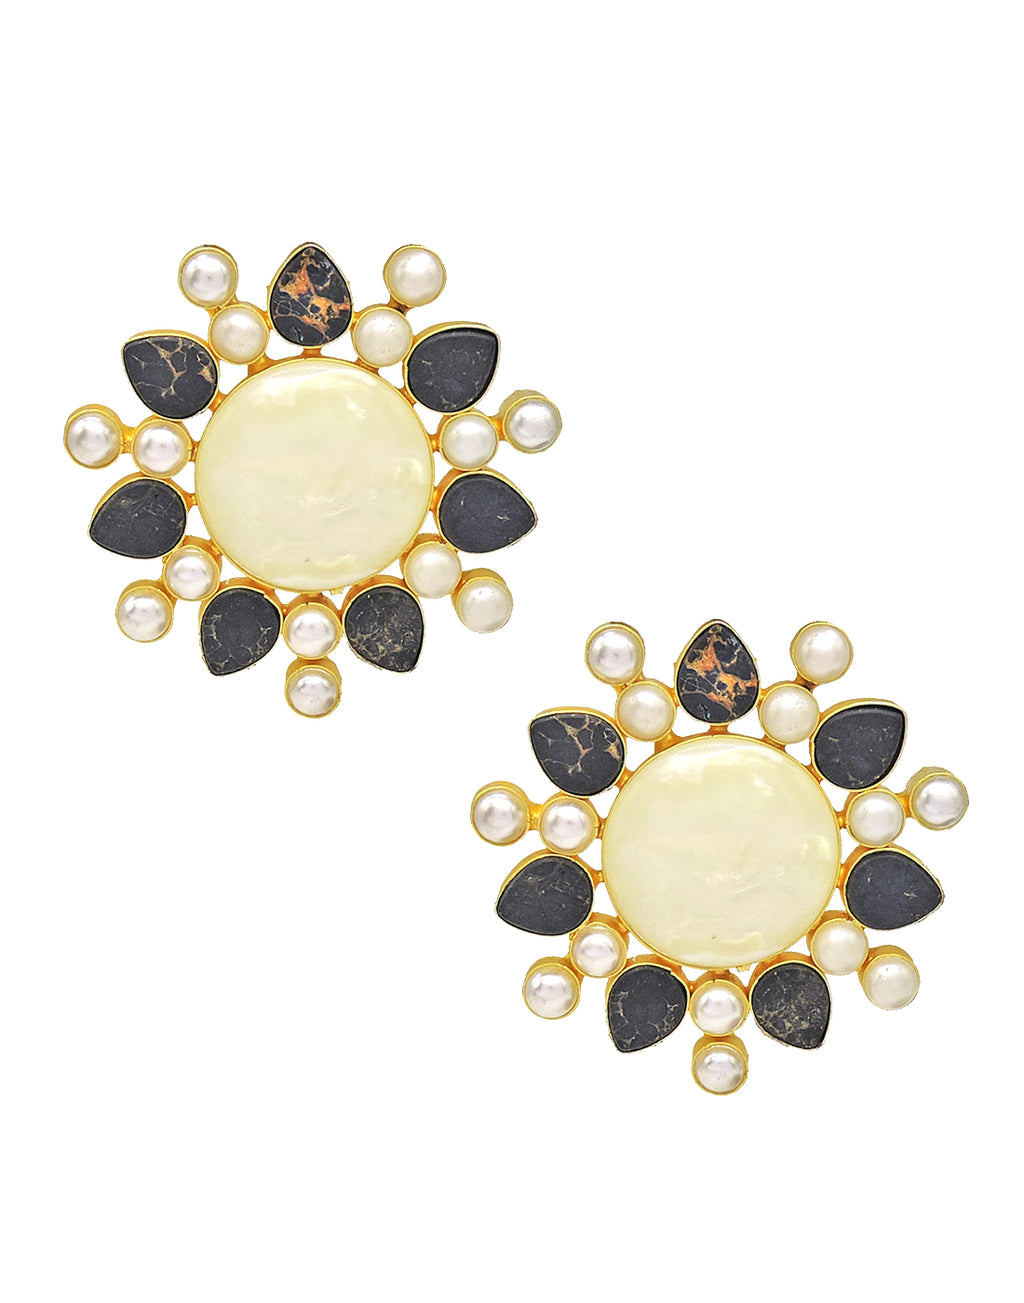 Contrast Flower Earrings - Statement Earrings - Gold-Plated & Hypoallergenic - Made in India - Dubai Jewellery - Dori